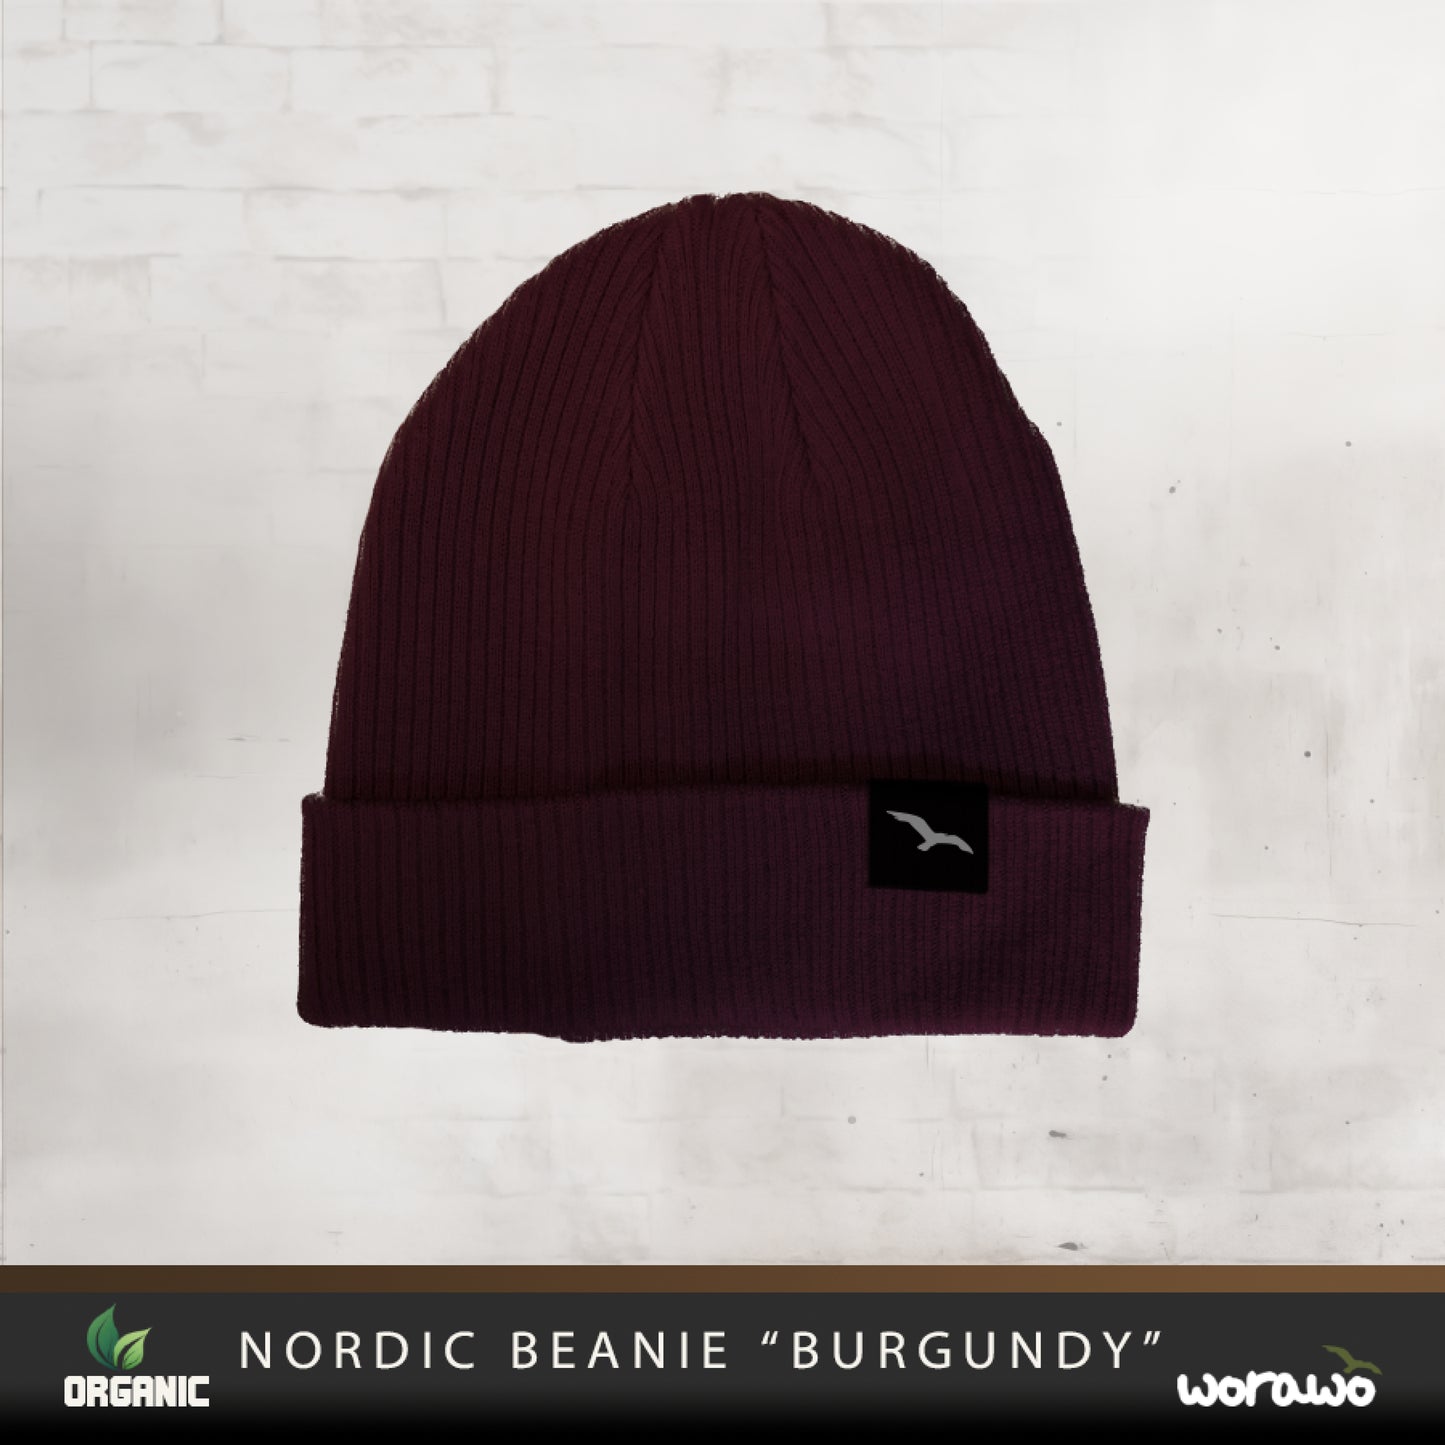 Nordic Beanie "burgundy"